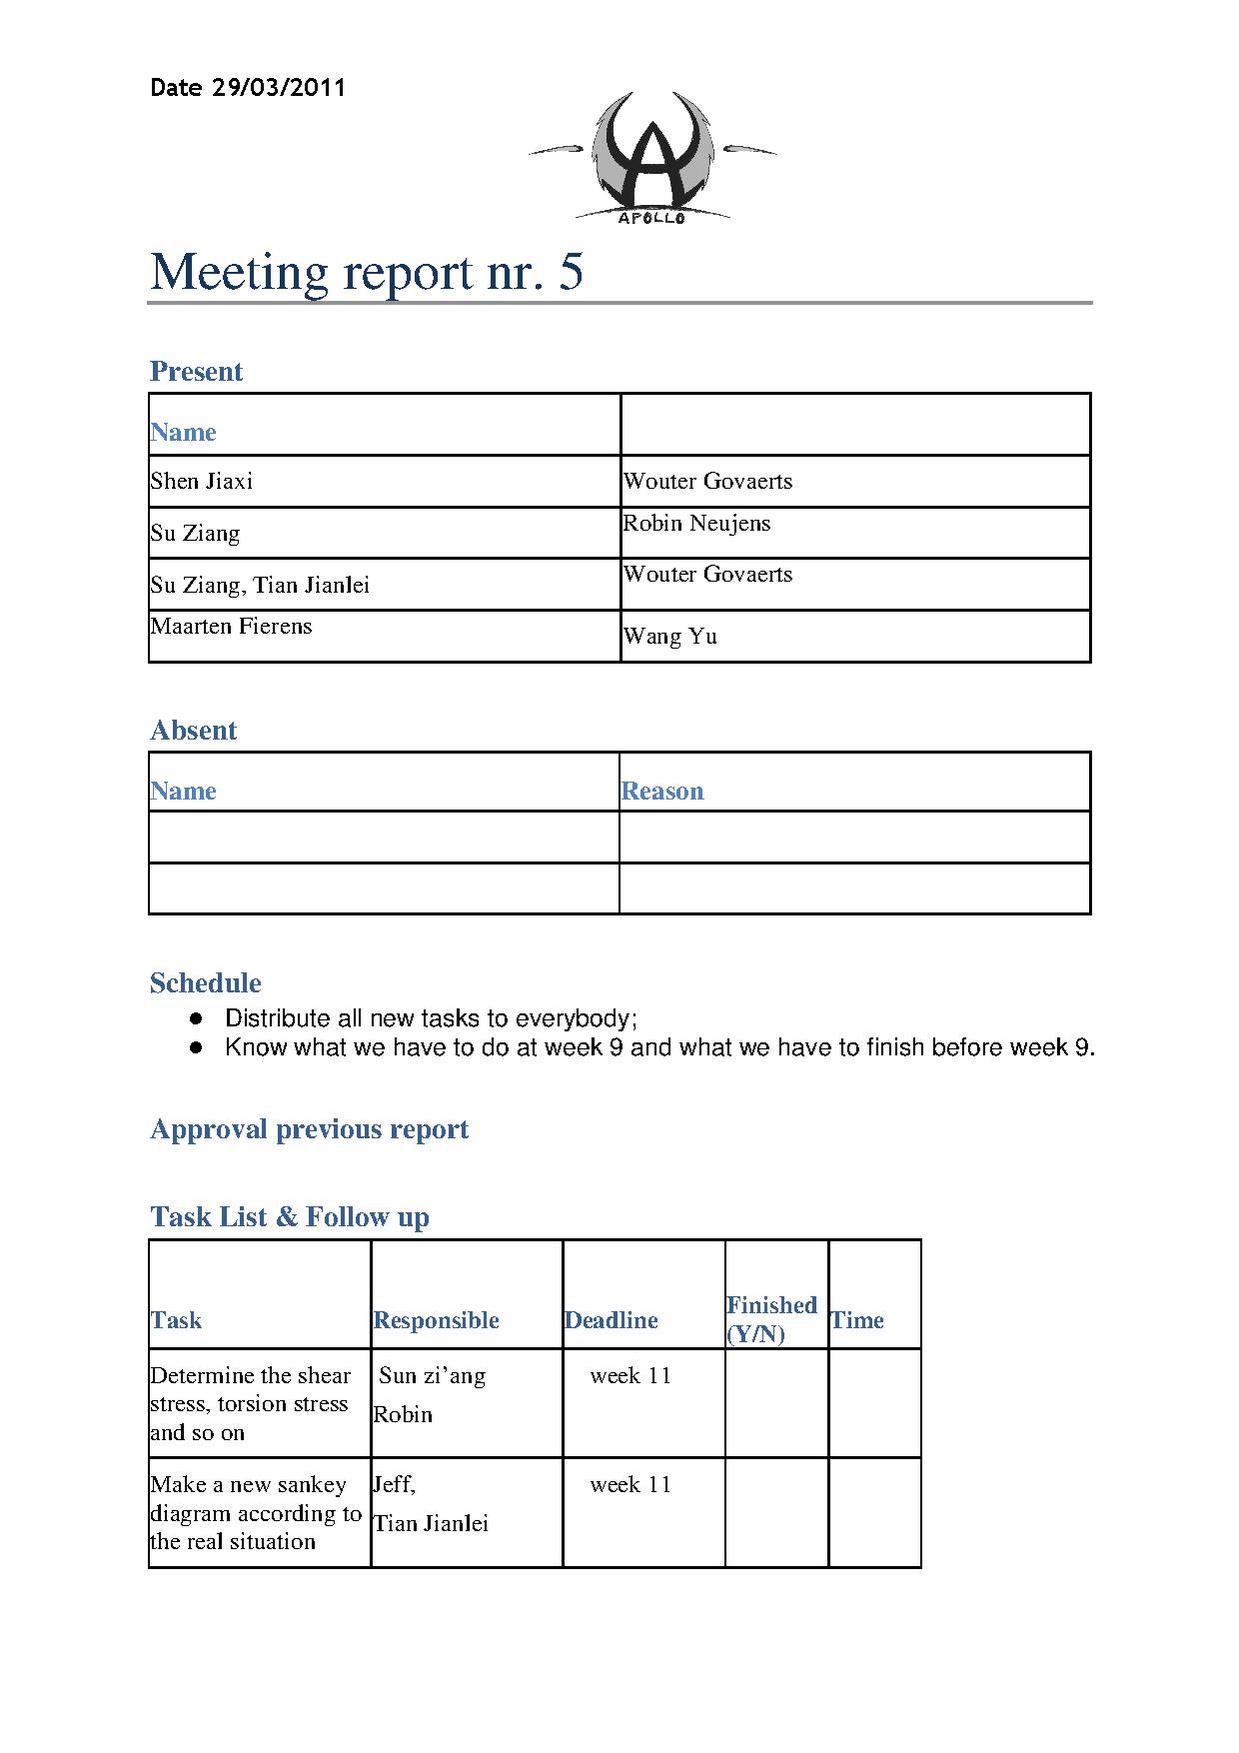 Meeting Report nr. 5